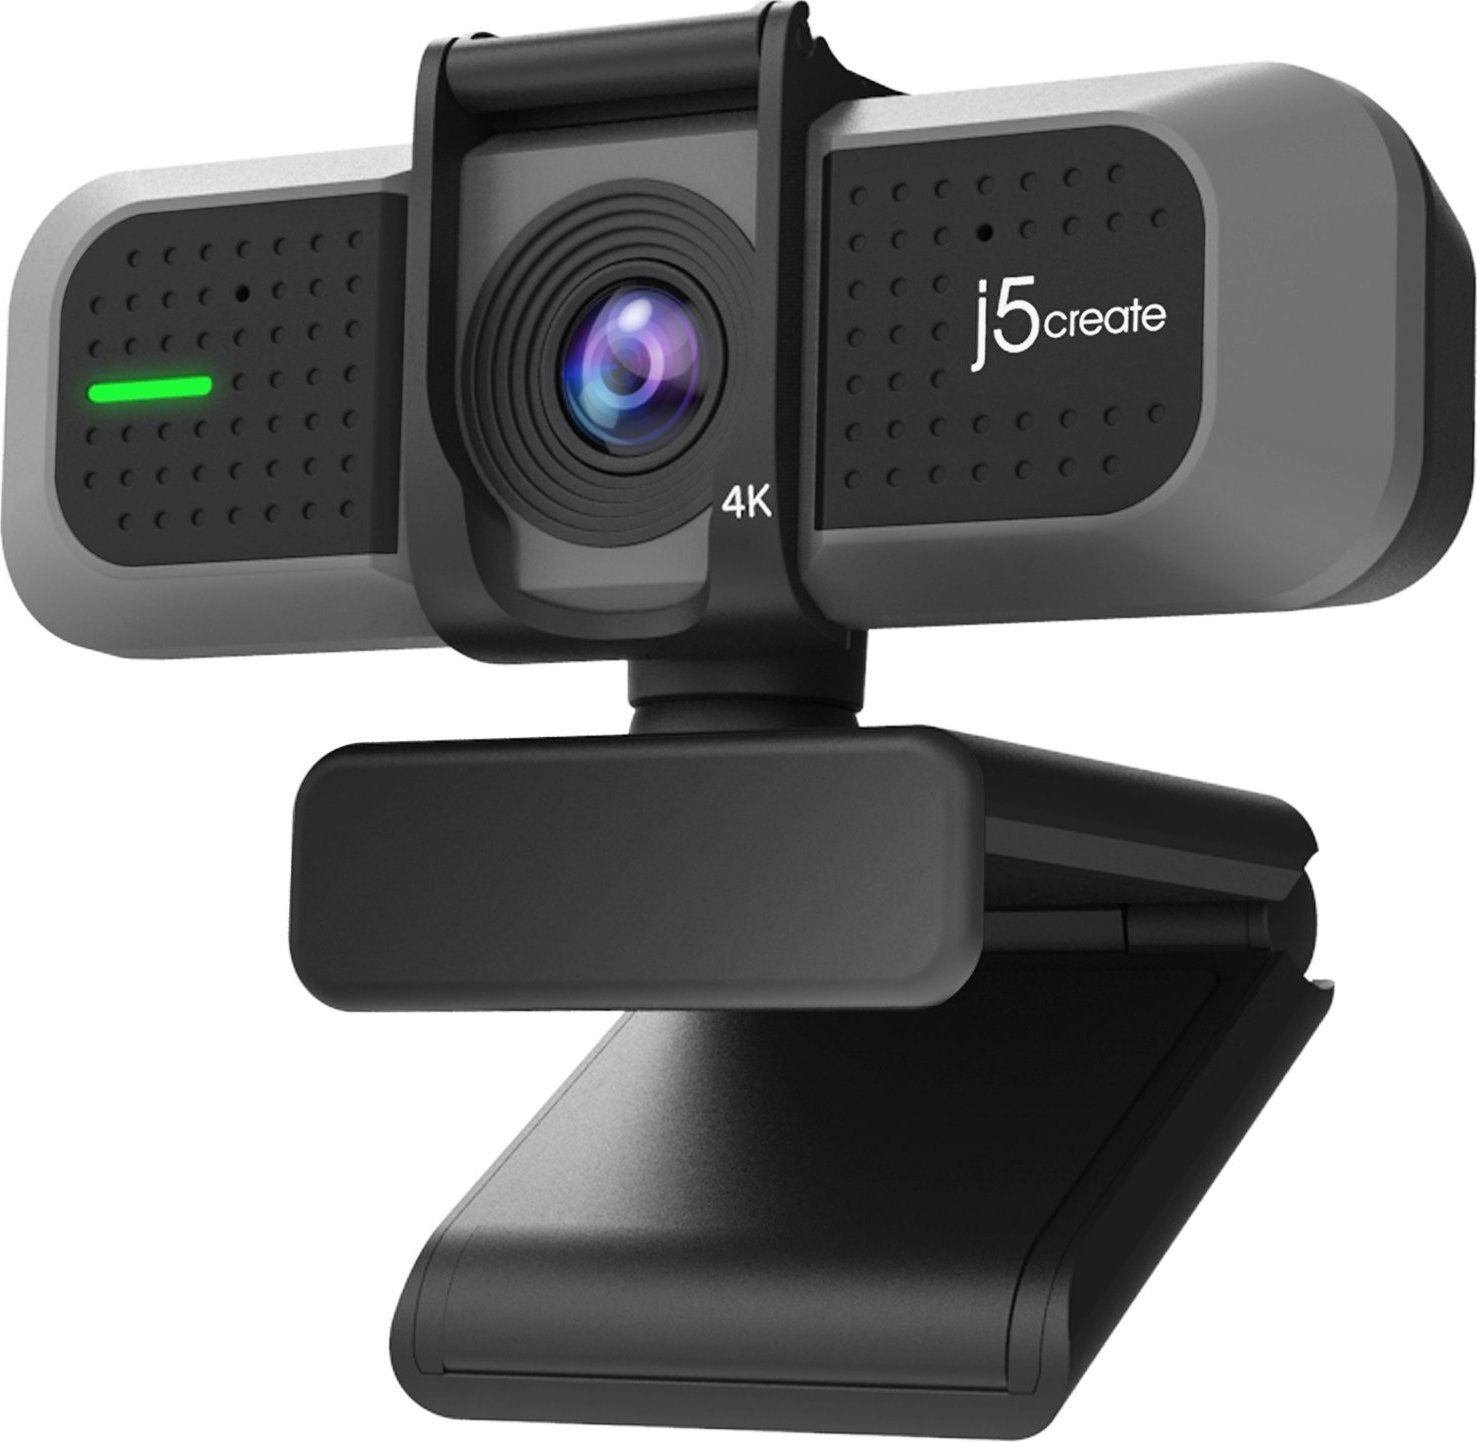 J5CREATE USB 4K ULTRA HD WEBCAM web kamera